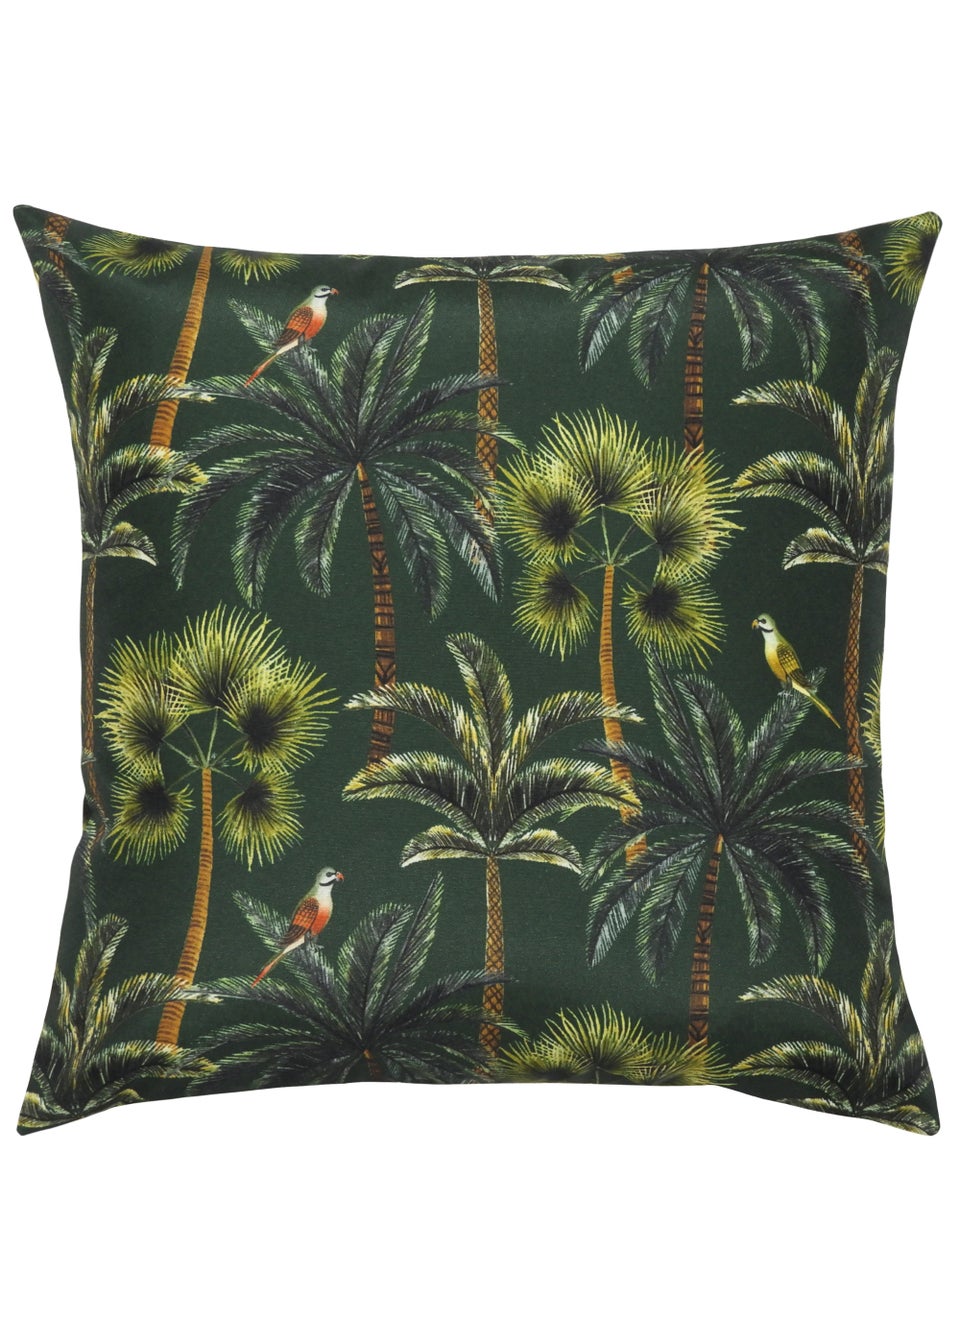 Evans Lichfield Palms Outdoor Filled Cushion (43cm x 43cm x 8cm)